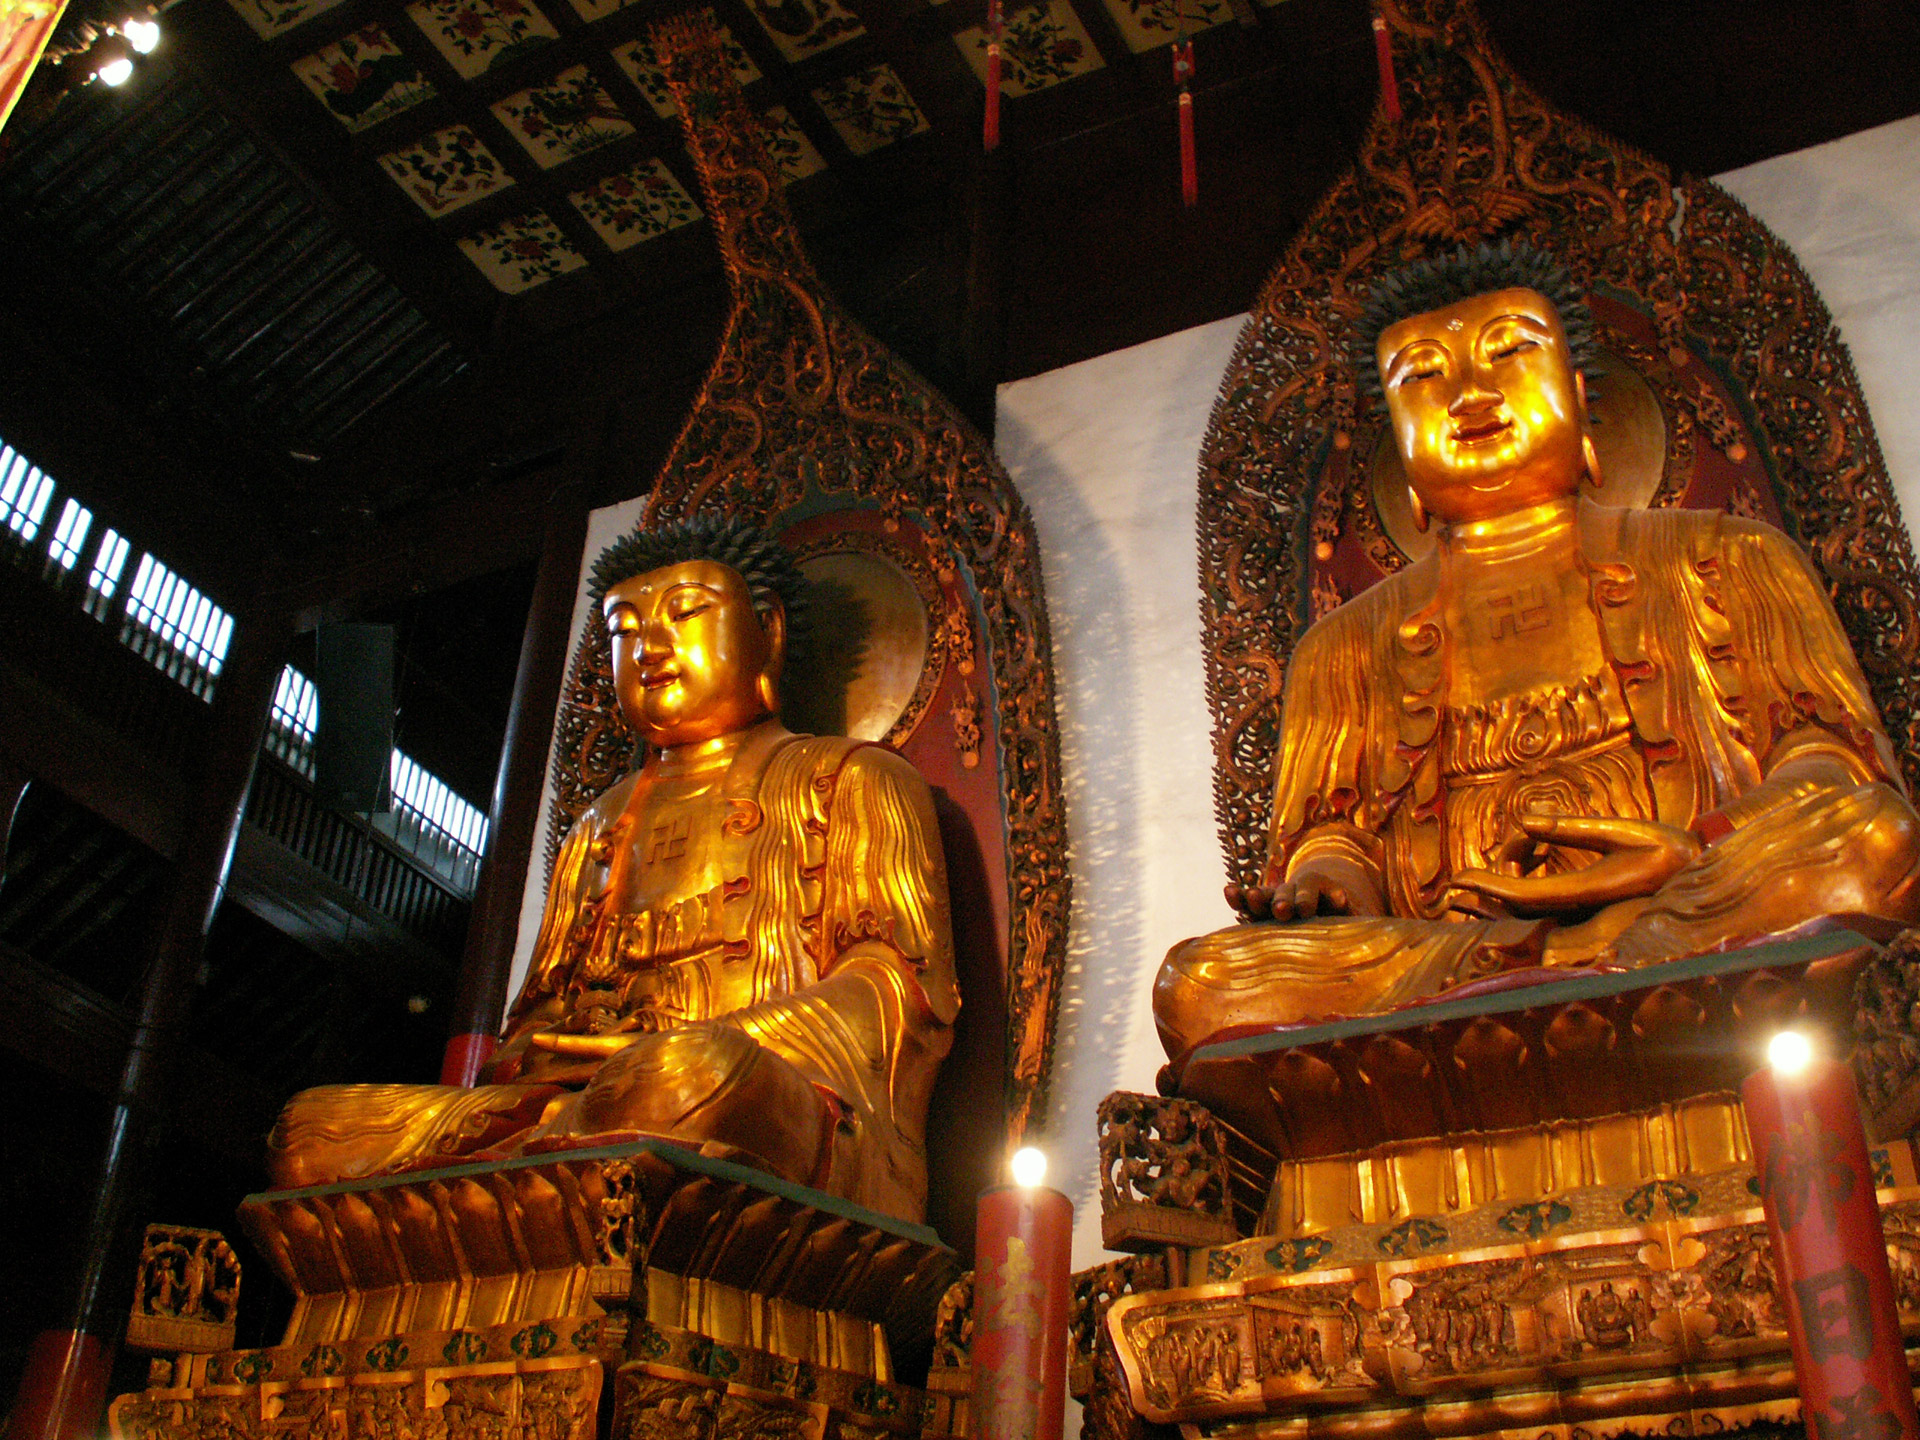 Download free photo of Jade,buddha,temple,shanghai,china - from needpix.com